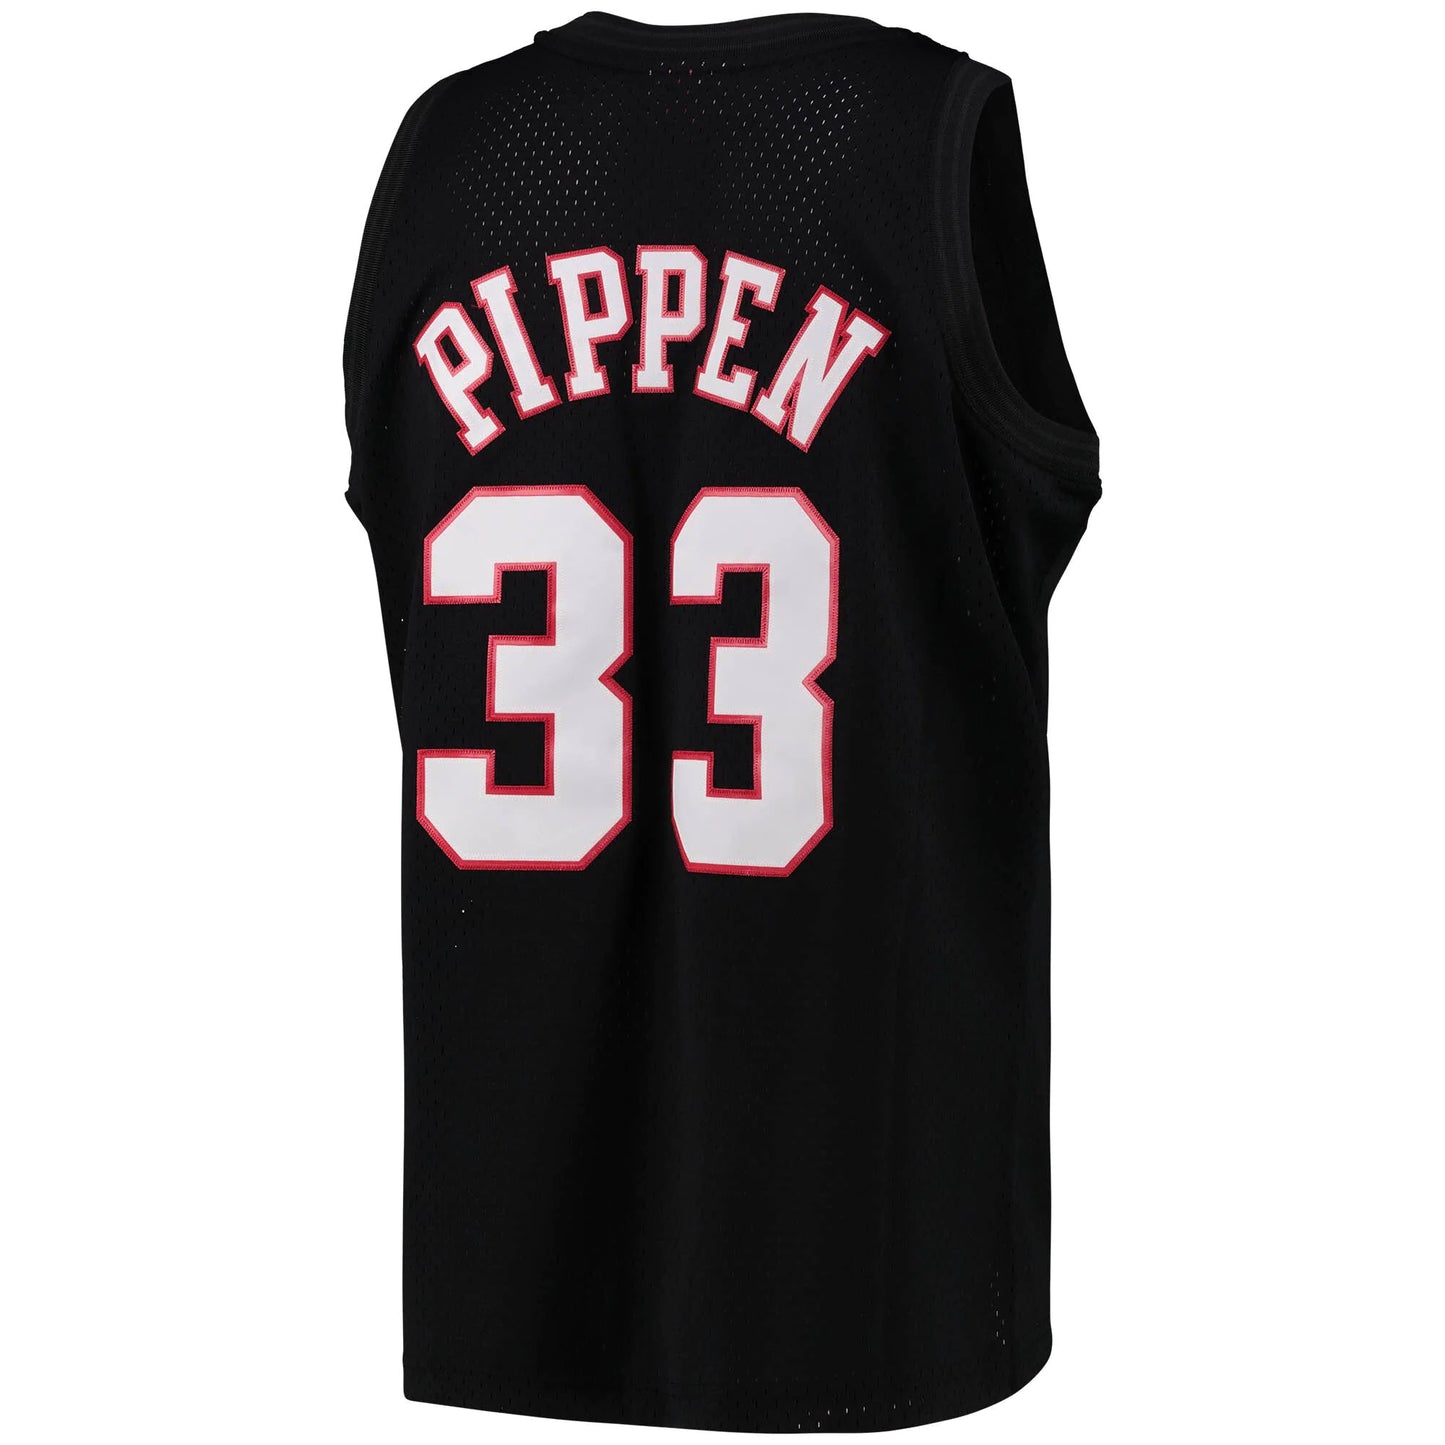 Men's Chicago Bulls Scottie Pippen Black Team Color Swingman Jersey by Mitchell & Ness